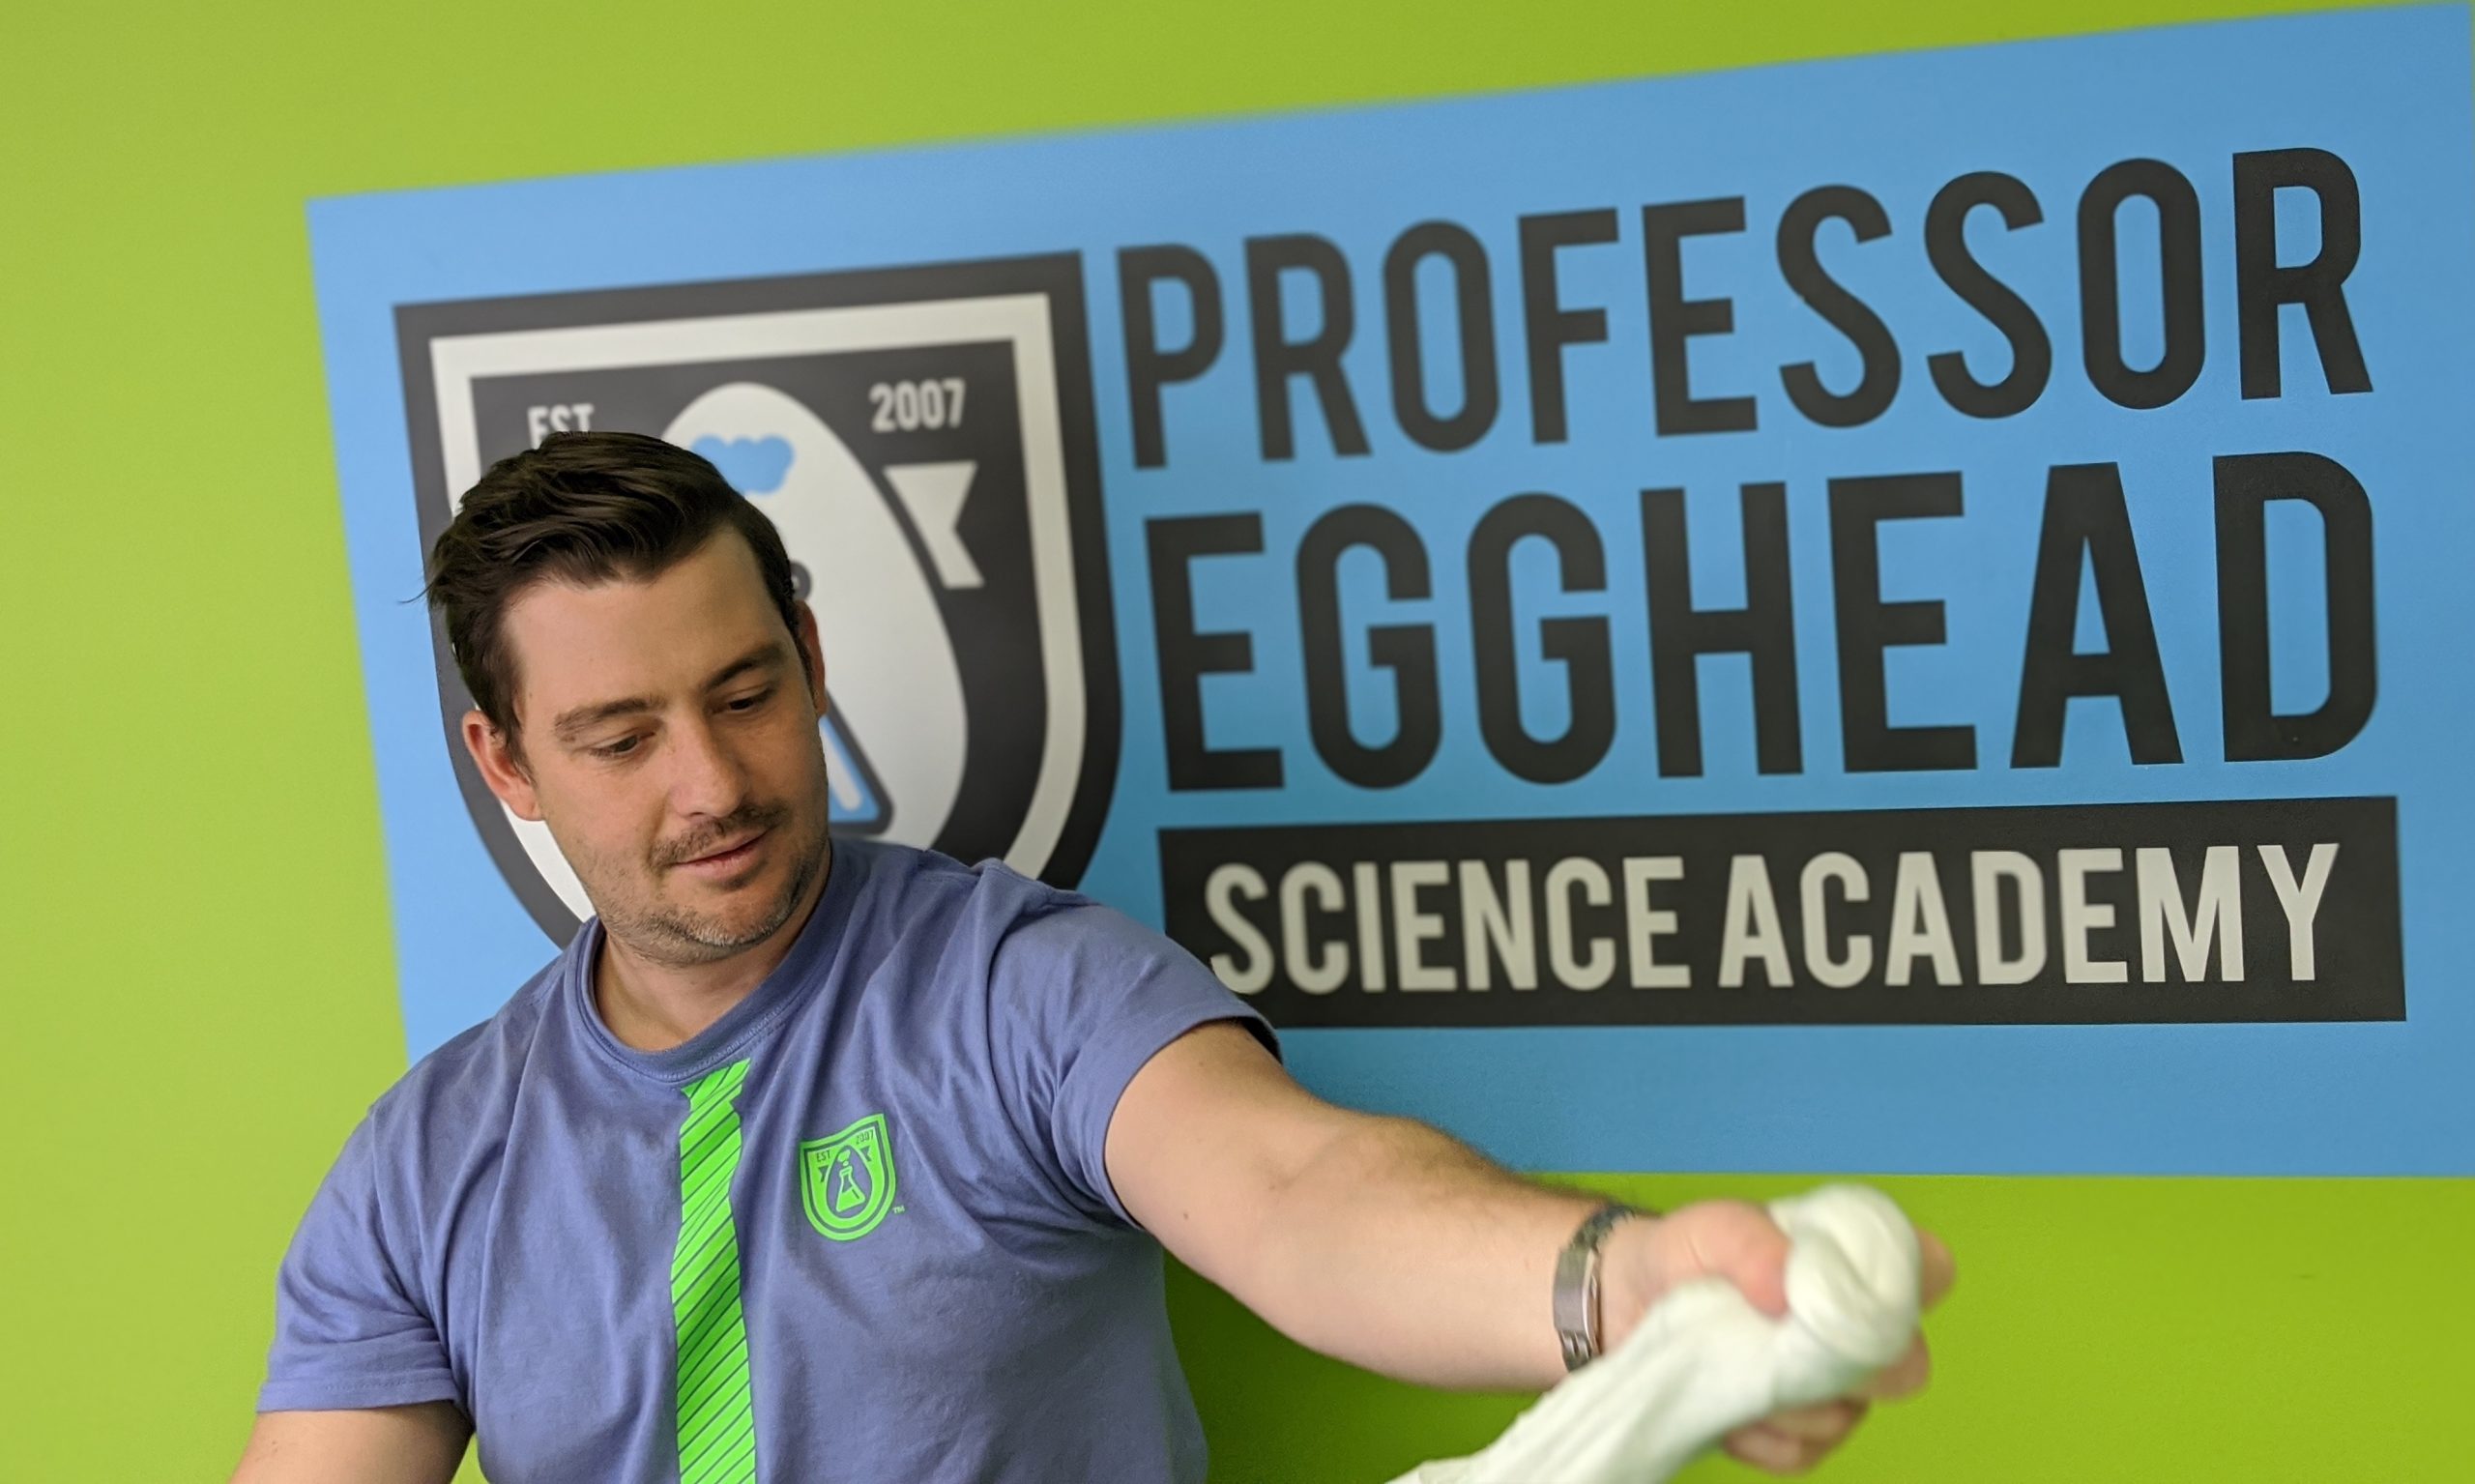 Nick Fraher, Professor Egghead Science Academy